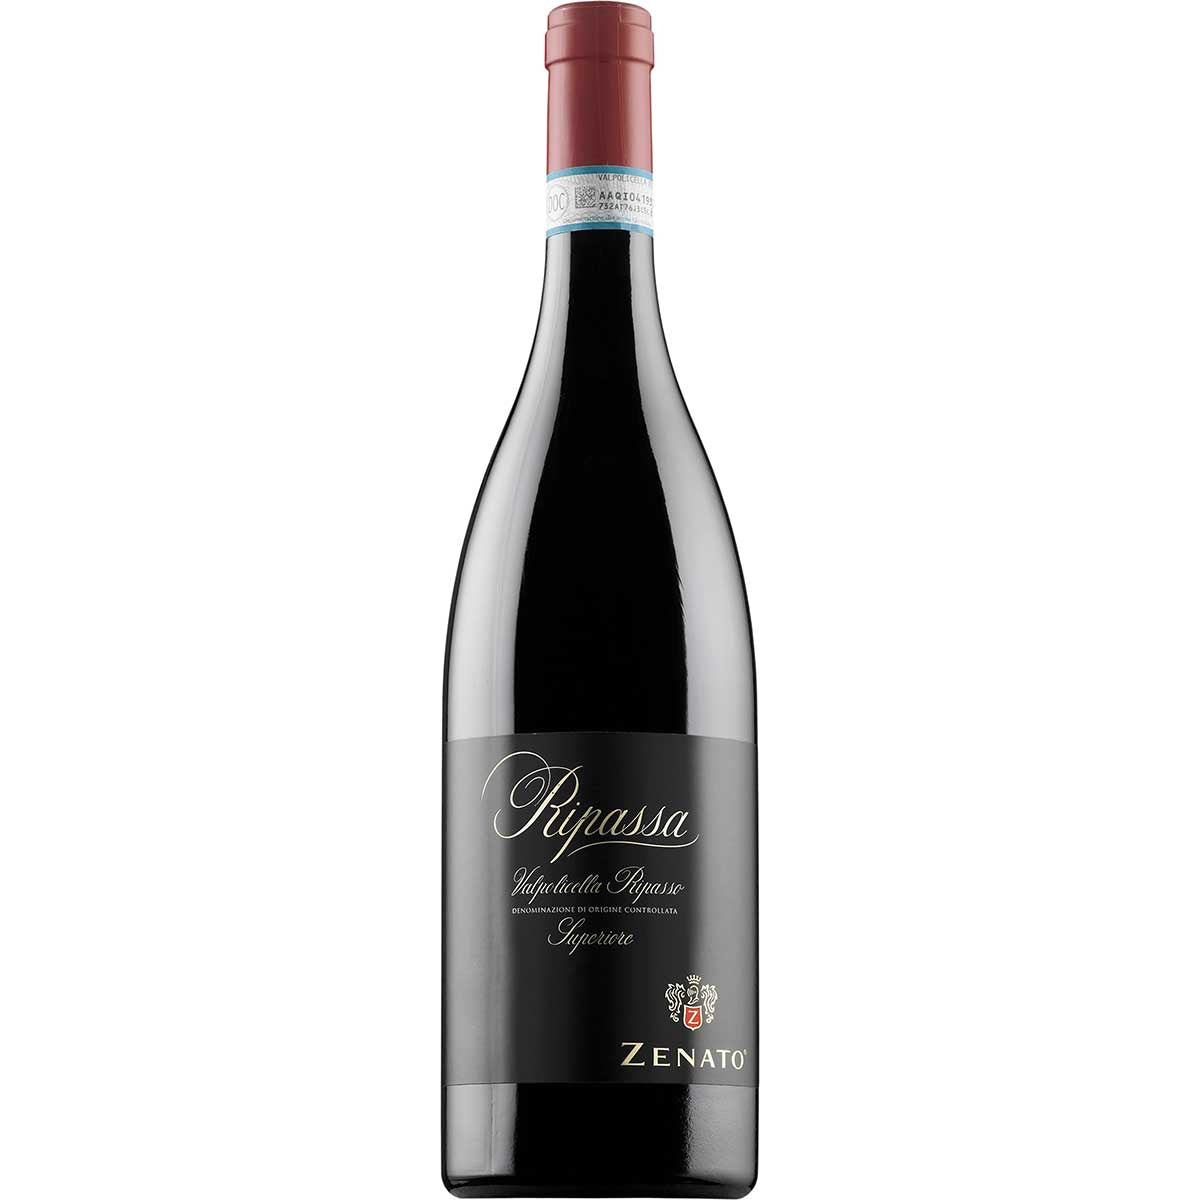 Buy Zenato Pinot Grigio Della Venezie IGT | Wines Online Singapore